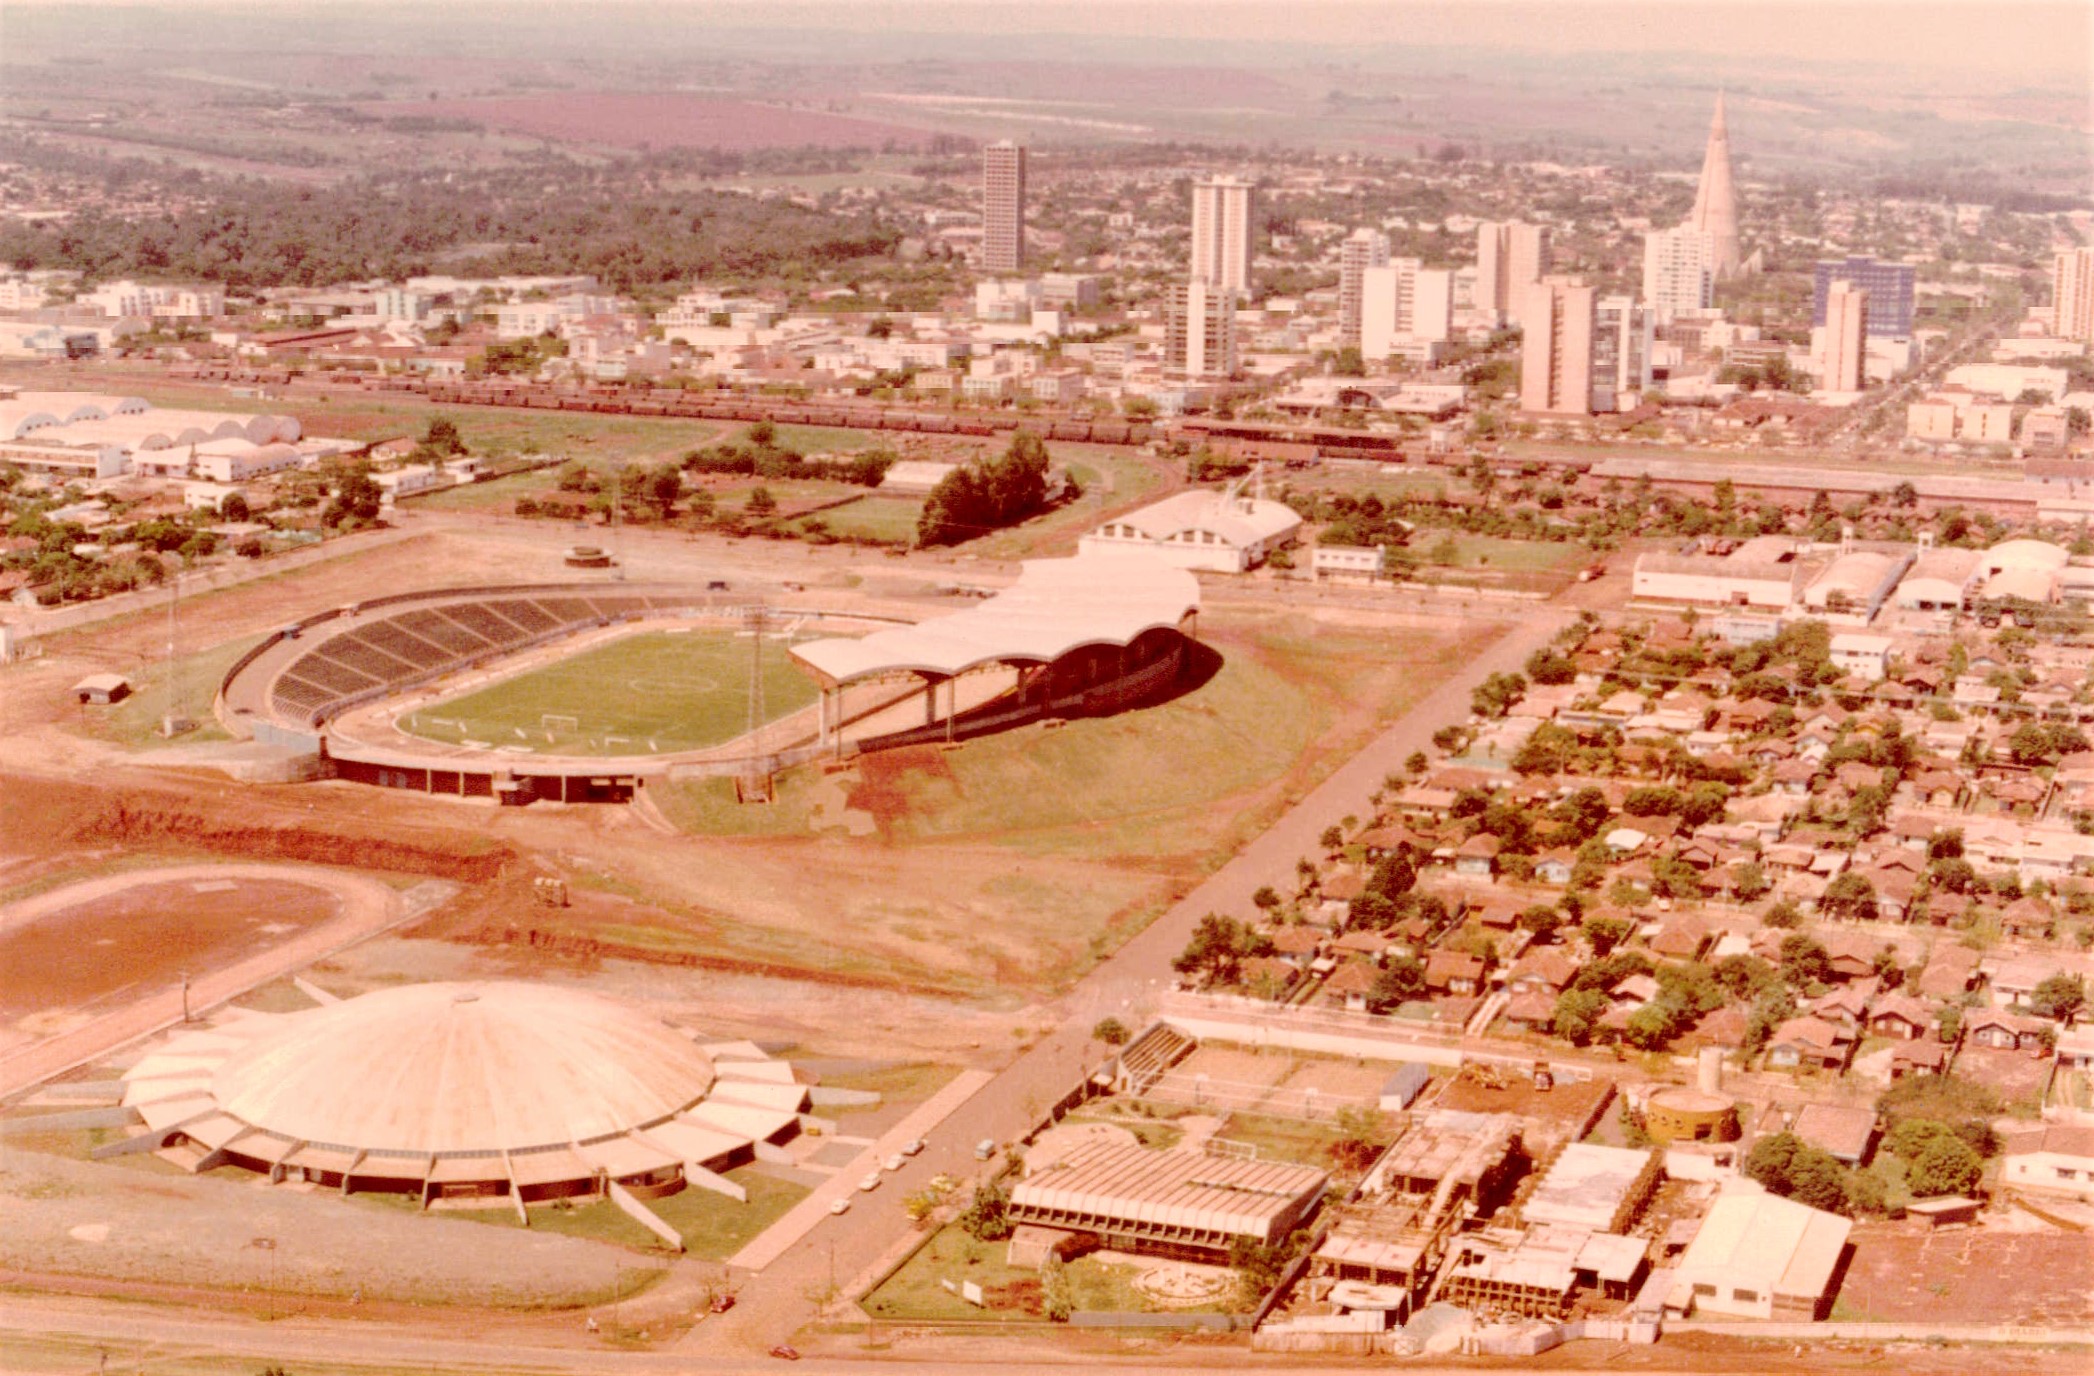 Vila Olímpica e centro de Maringá - Início dos anos 1980